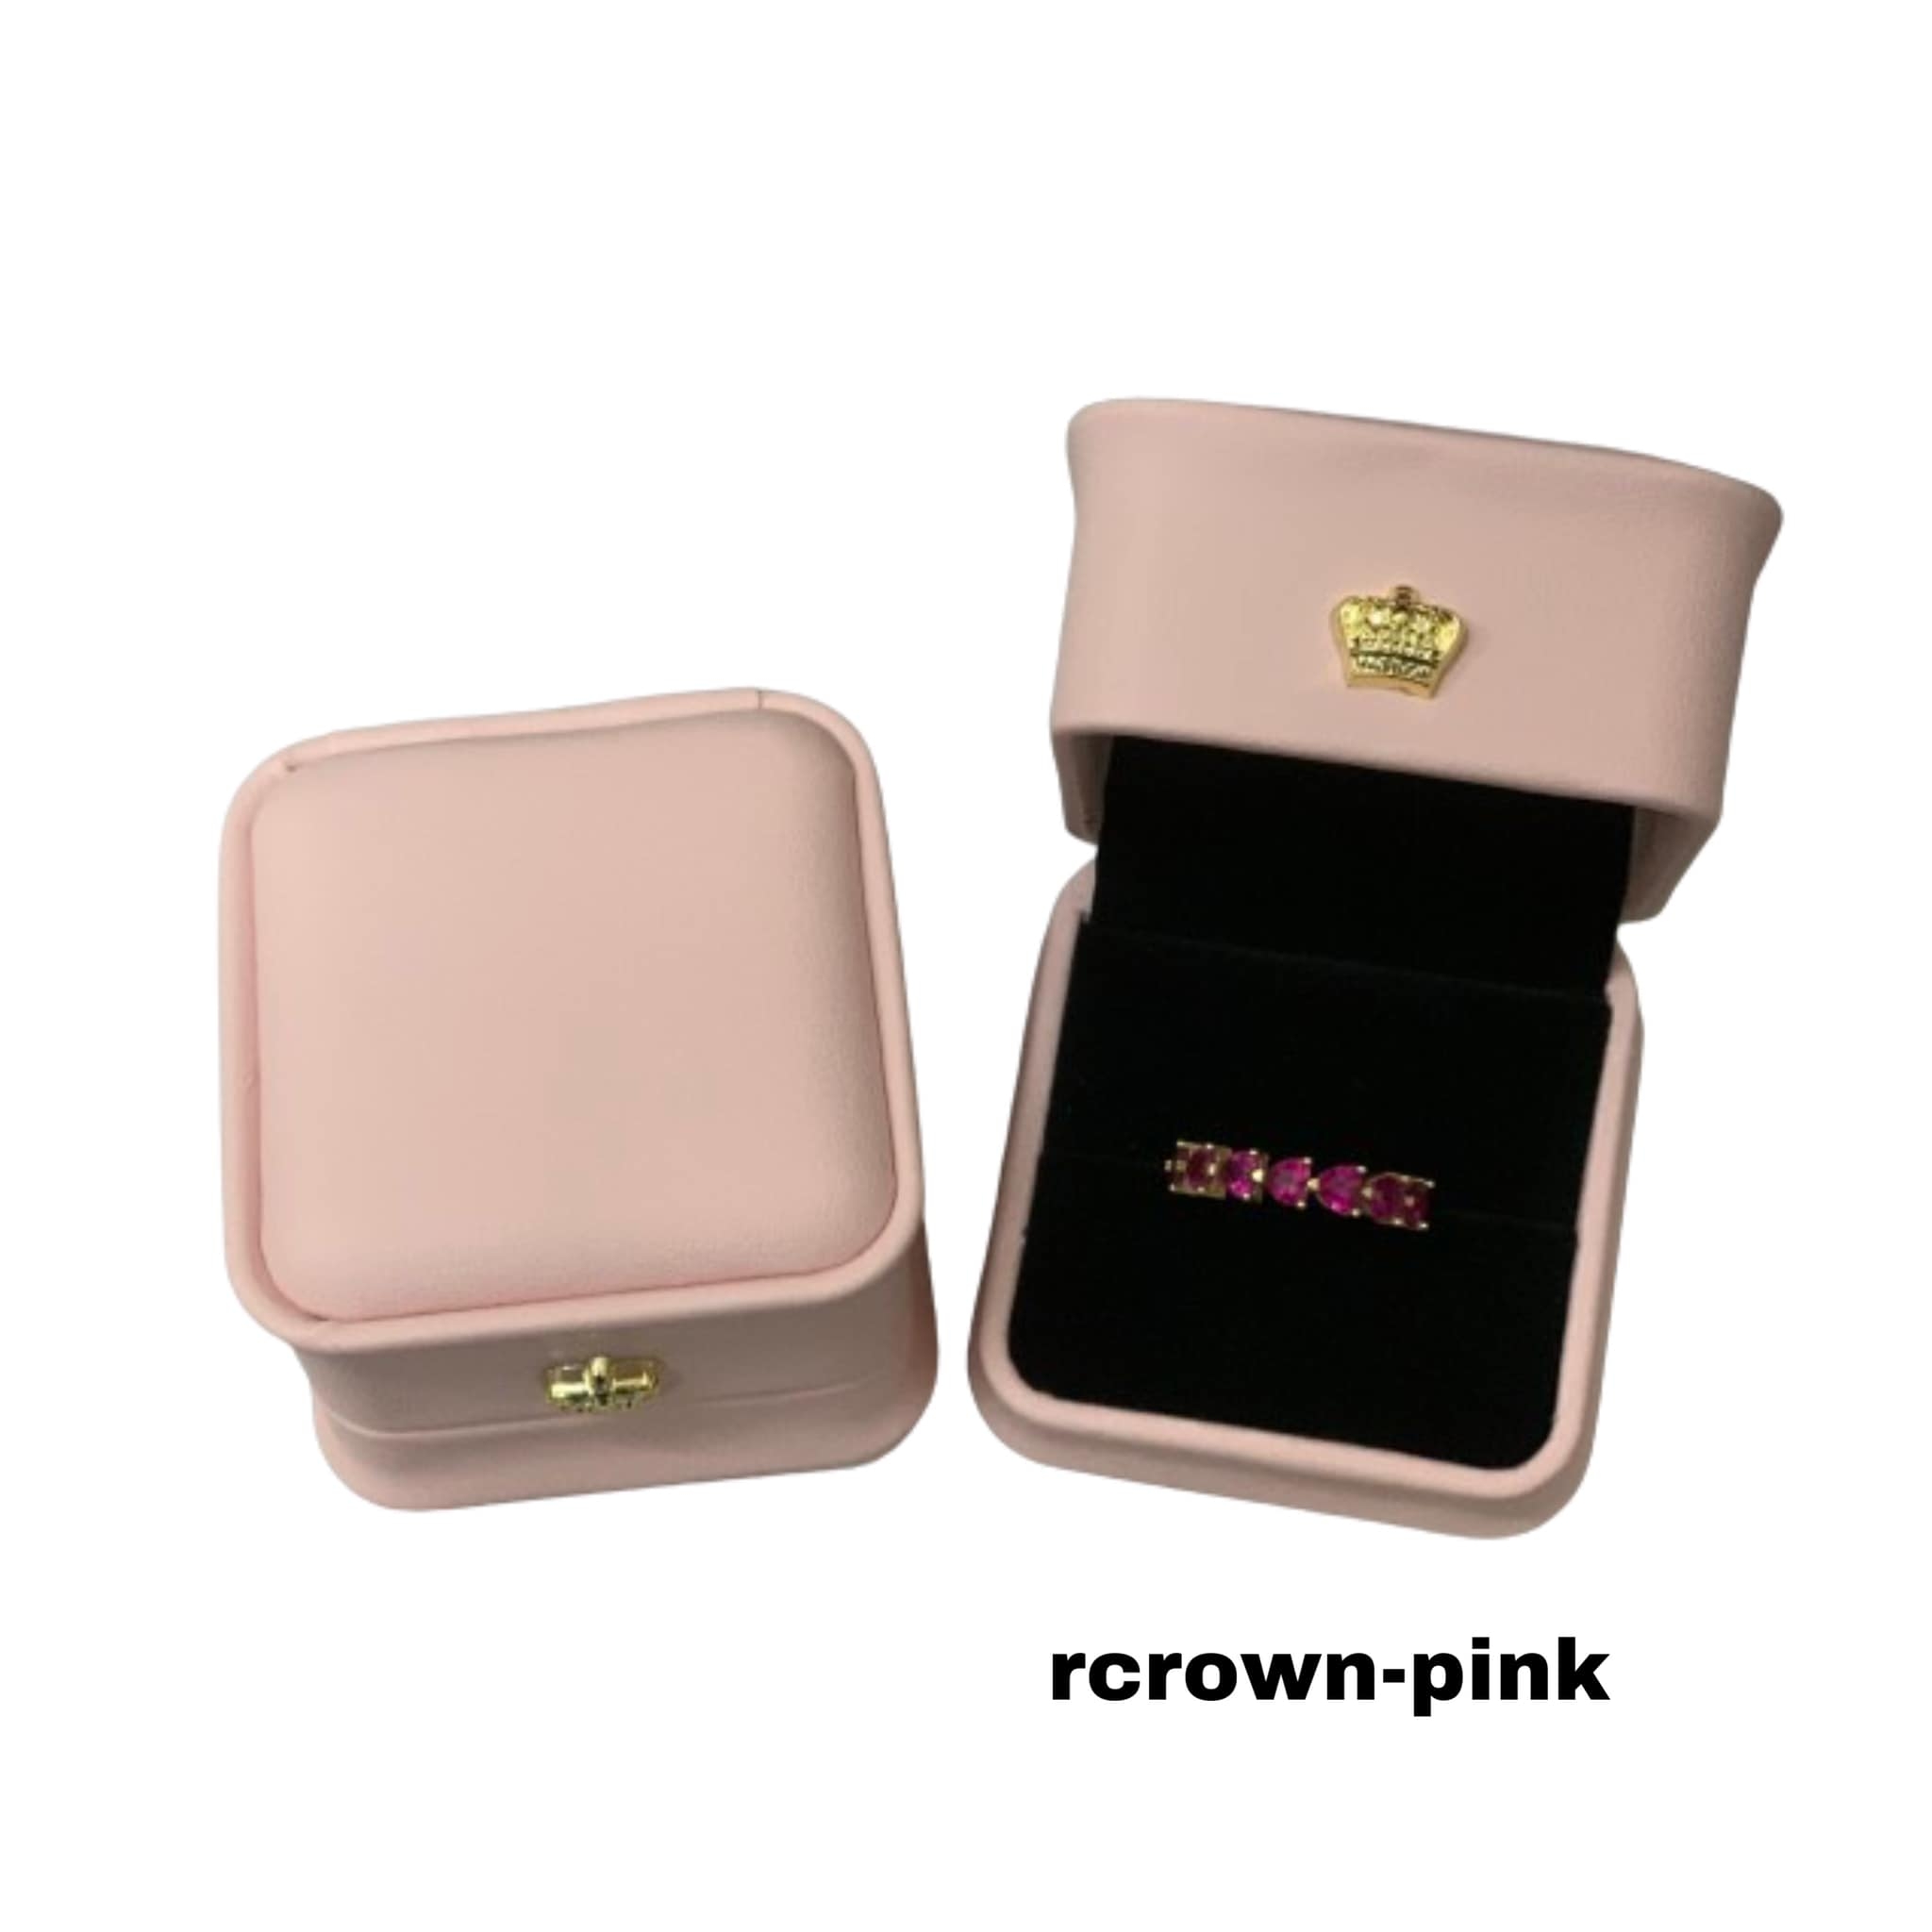 rcrown-pink